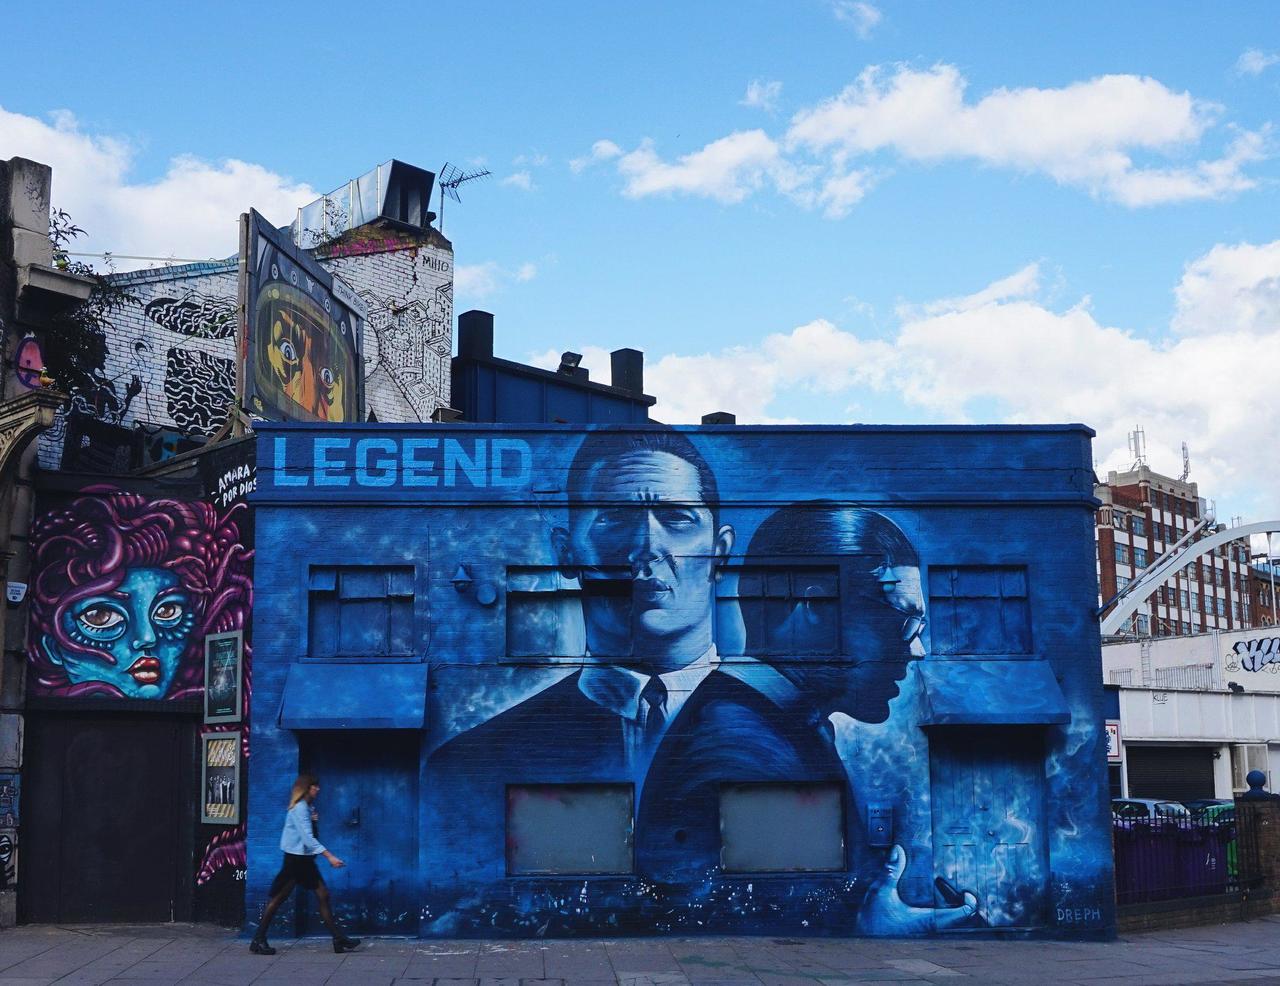 RT: @spectrum12345

When People Match Places #London #lovelondon #Londonislovinit #streetart #Shoreditch #graffiti… http://t.co/TKLf846rc9